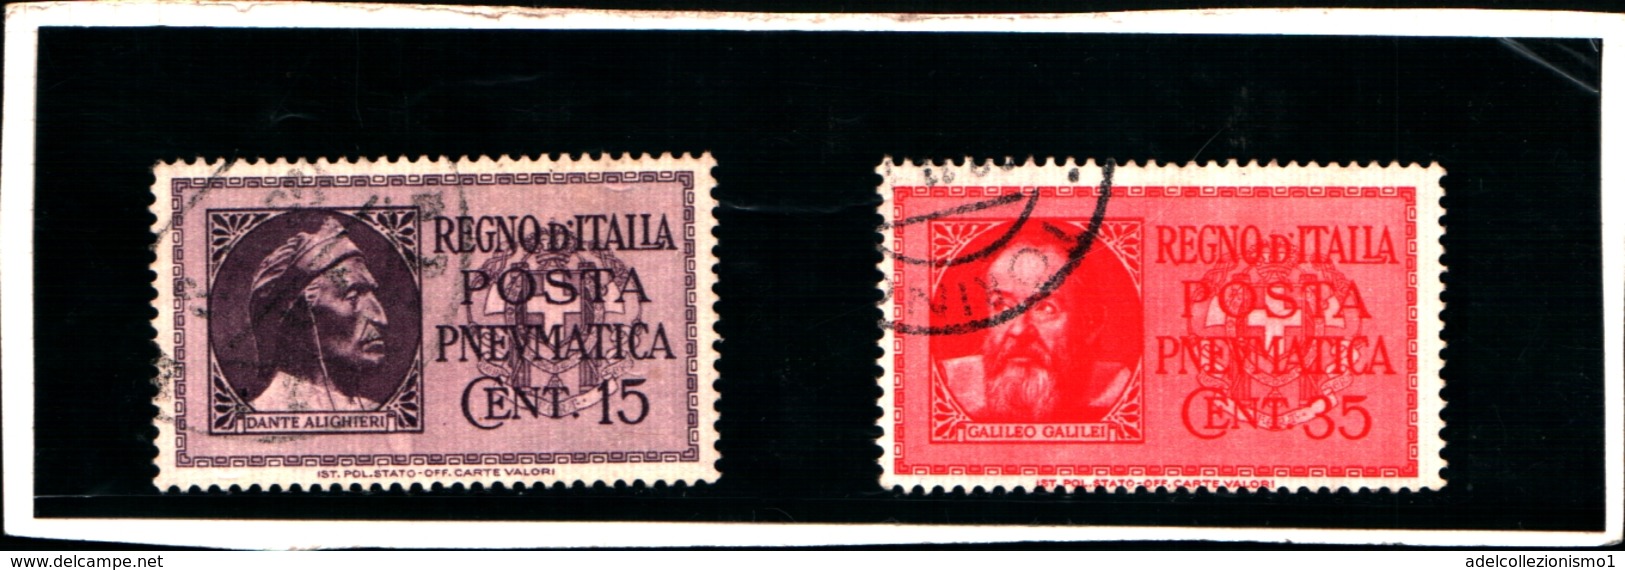 91063) ITALIA-Effigie Di Dante Alighieri E Galileo Galilei - POSTA PNEUMATICA - 29 Marzo 1933-USATI - Poste Pneumatique